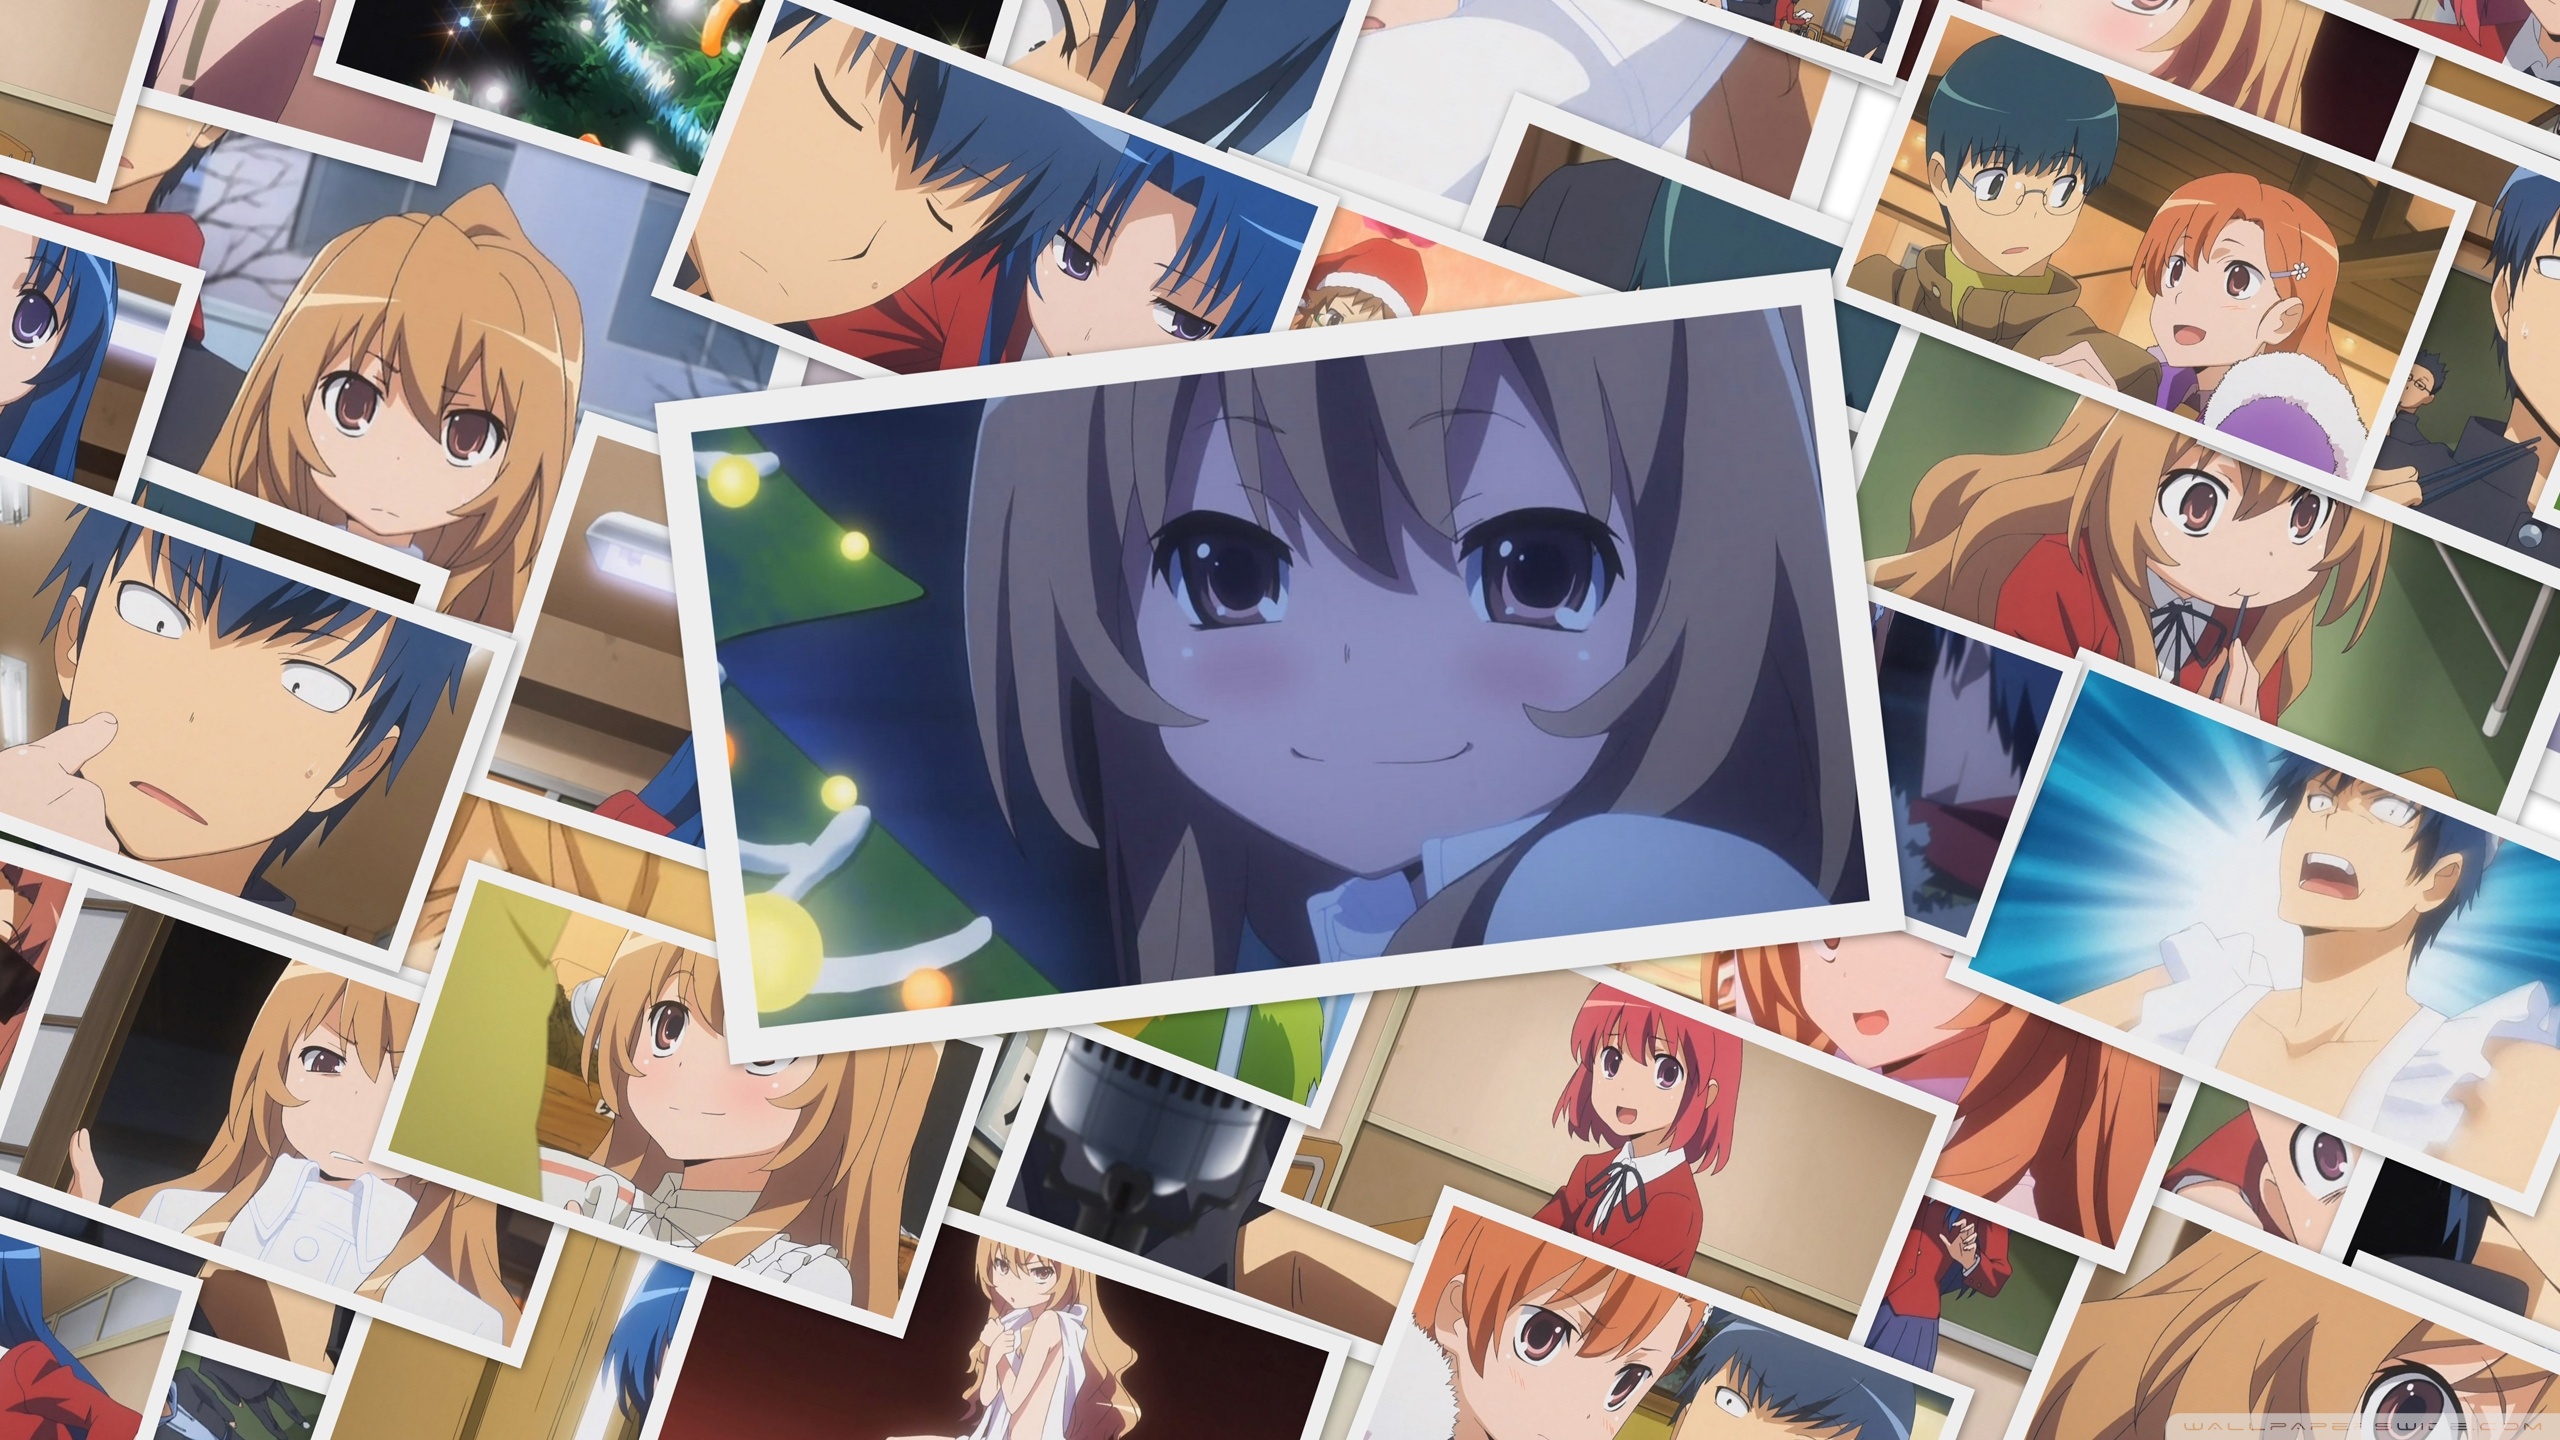 Anime Collage Ultra Hd Desktop Background Wallpaper For 4k Uhd Tv